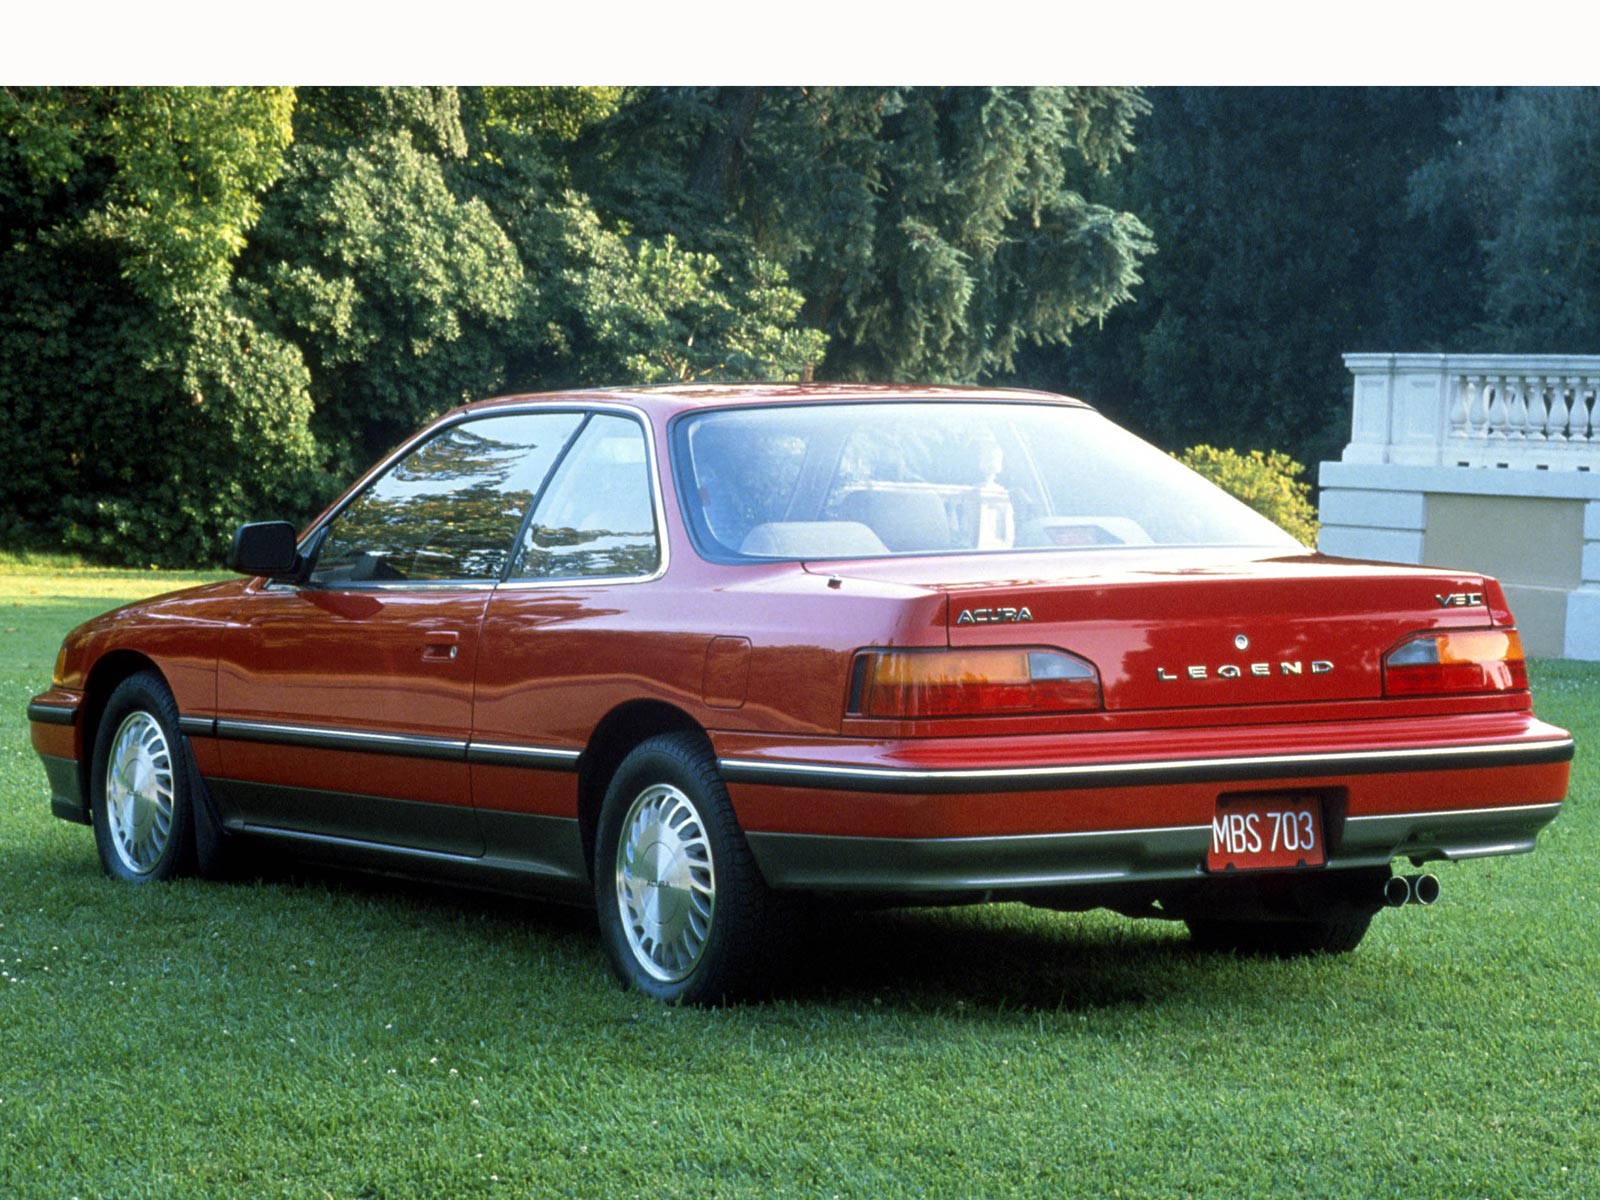 1986 bis 1990 Acura Legend Coupe | Autoguru-Katalog.at